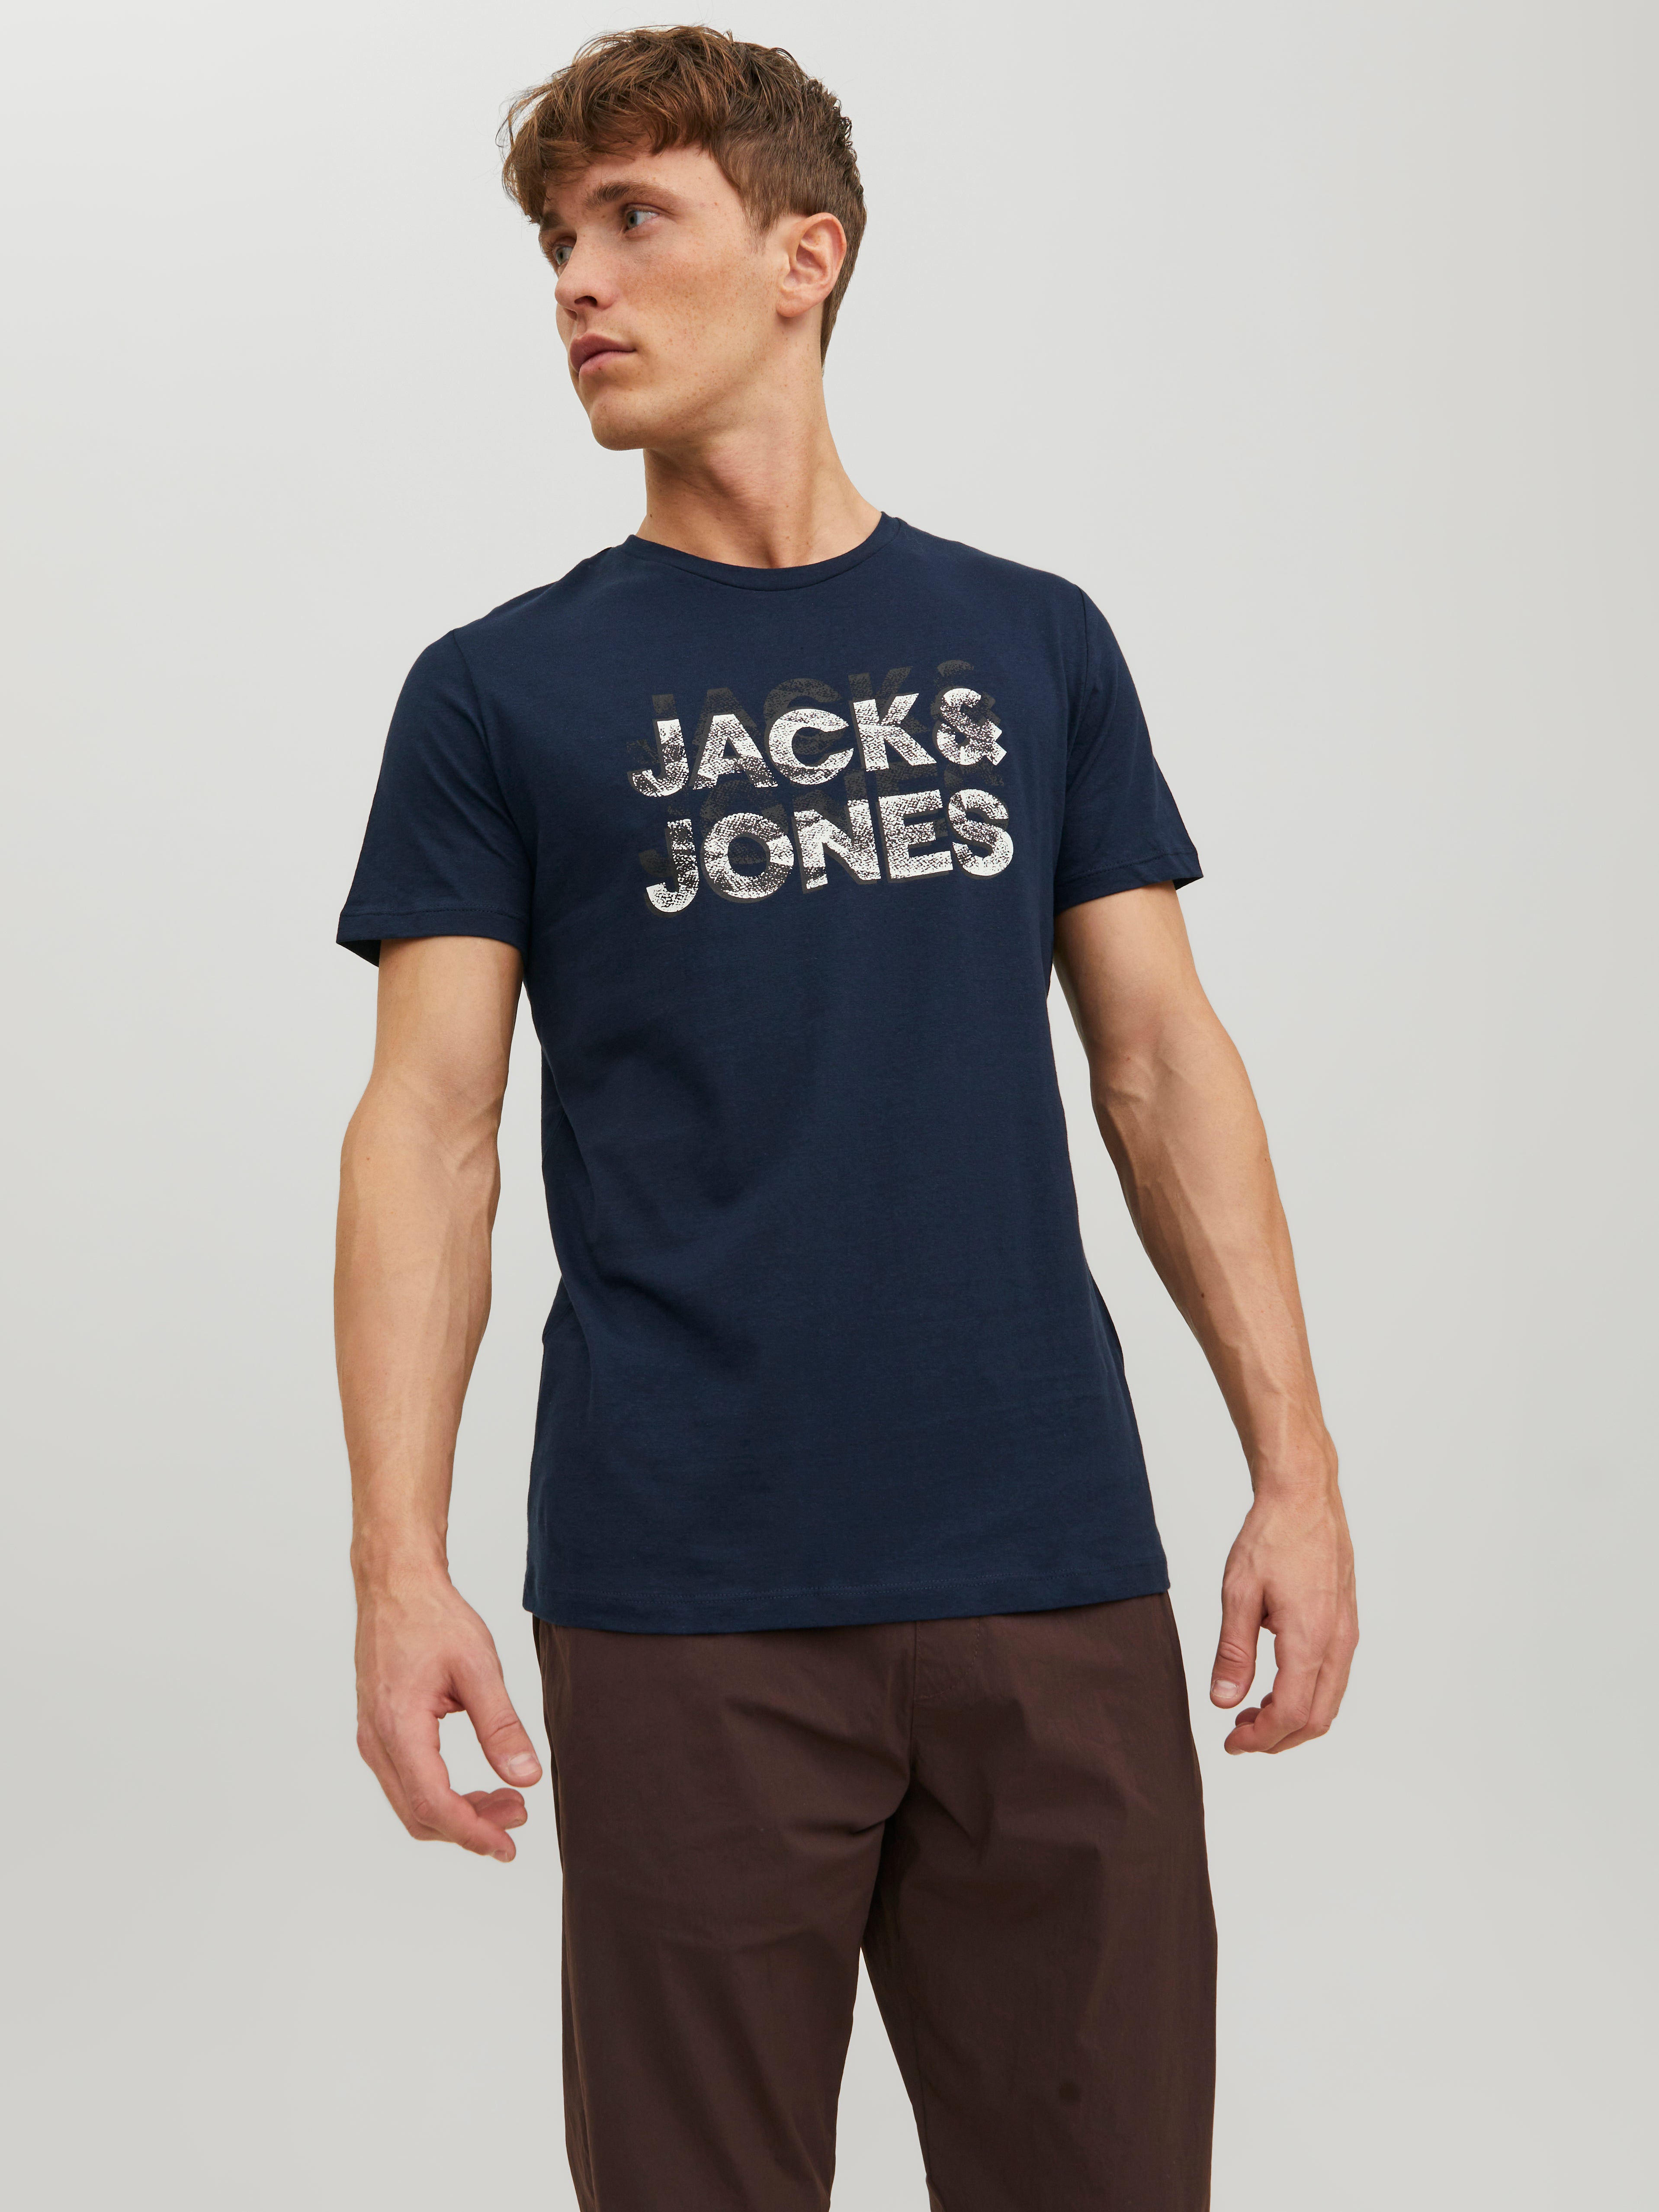 Rabatt 54 % HERREN Hemden & T-Shirts Casual Dunkelblau L Jack & Jones T-Shirt 